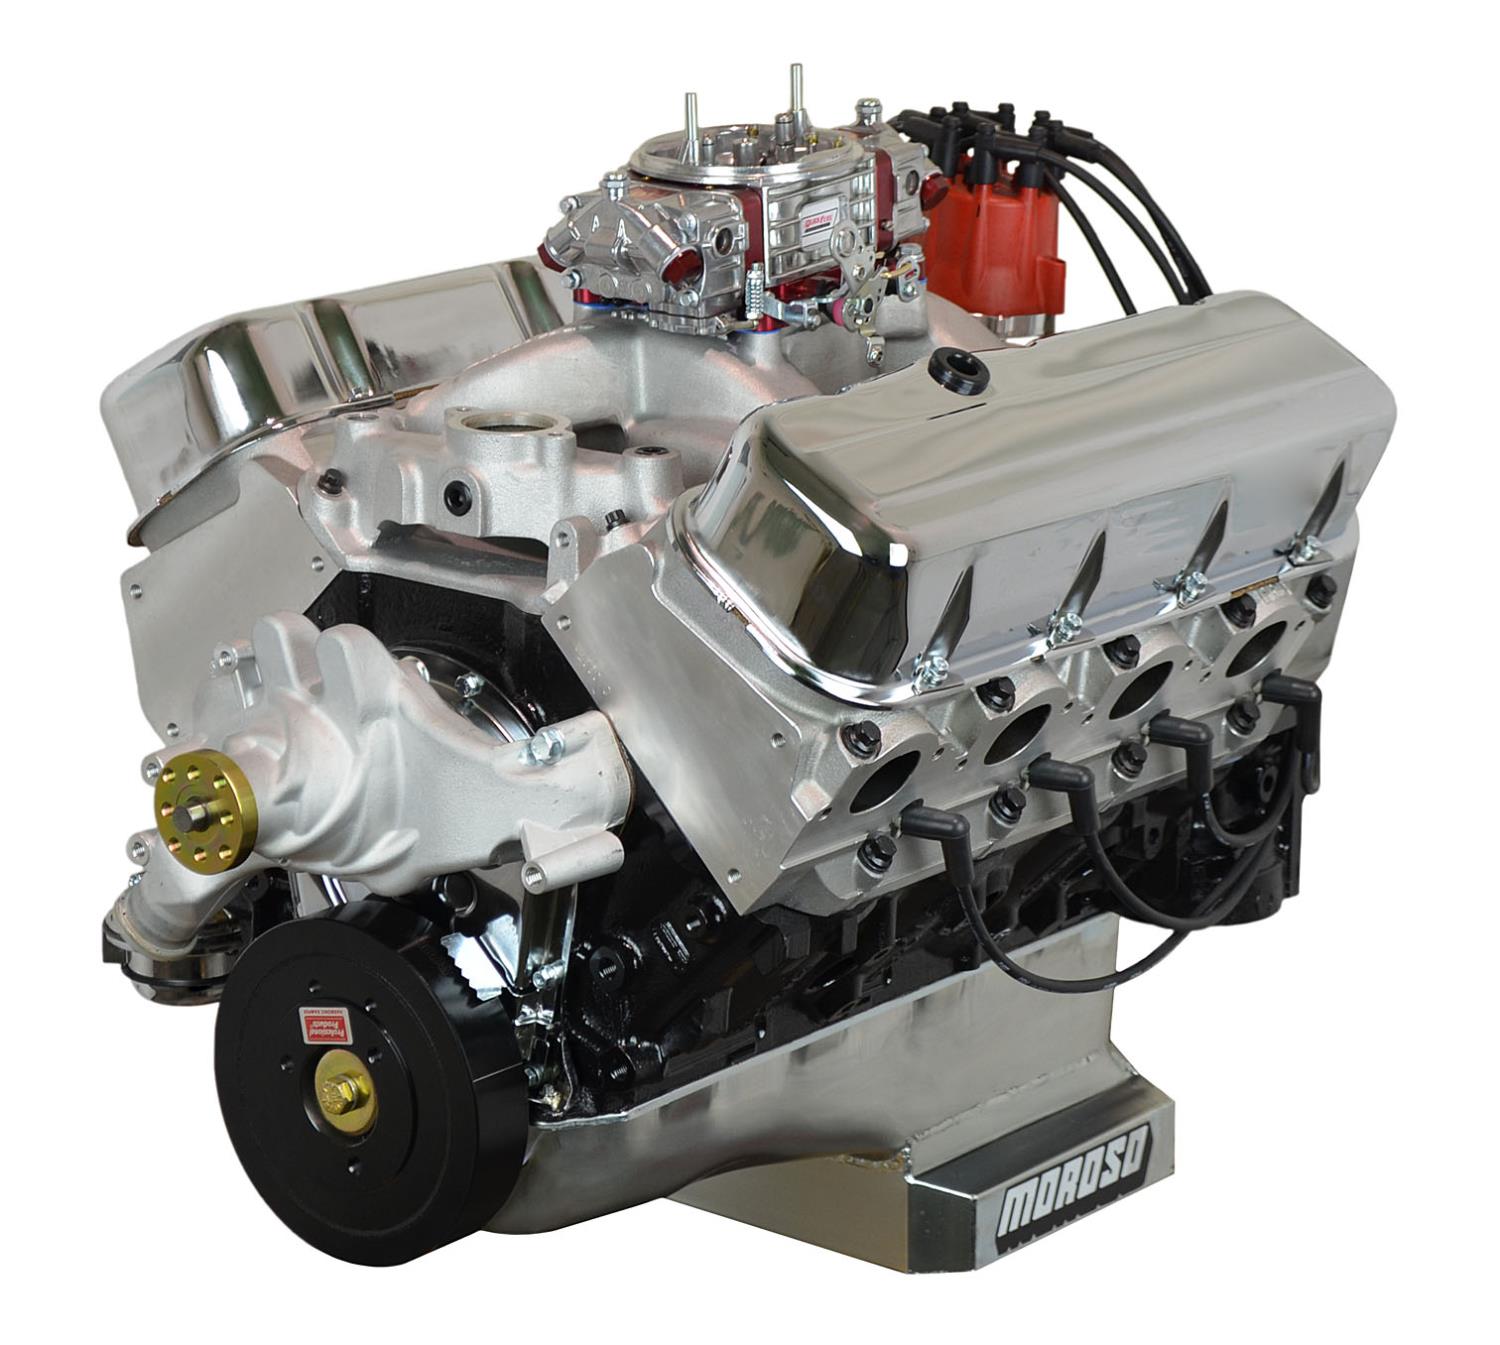 HP42C High Performance Crate Engine Big Block Chevy 540ci / 660HP / 650TQ